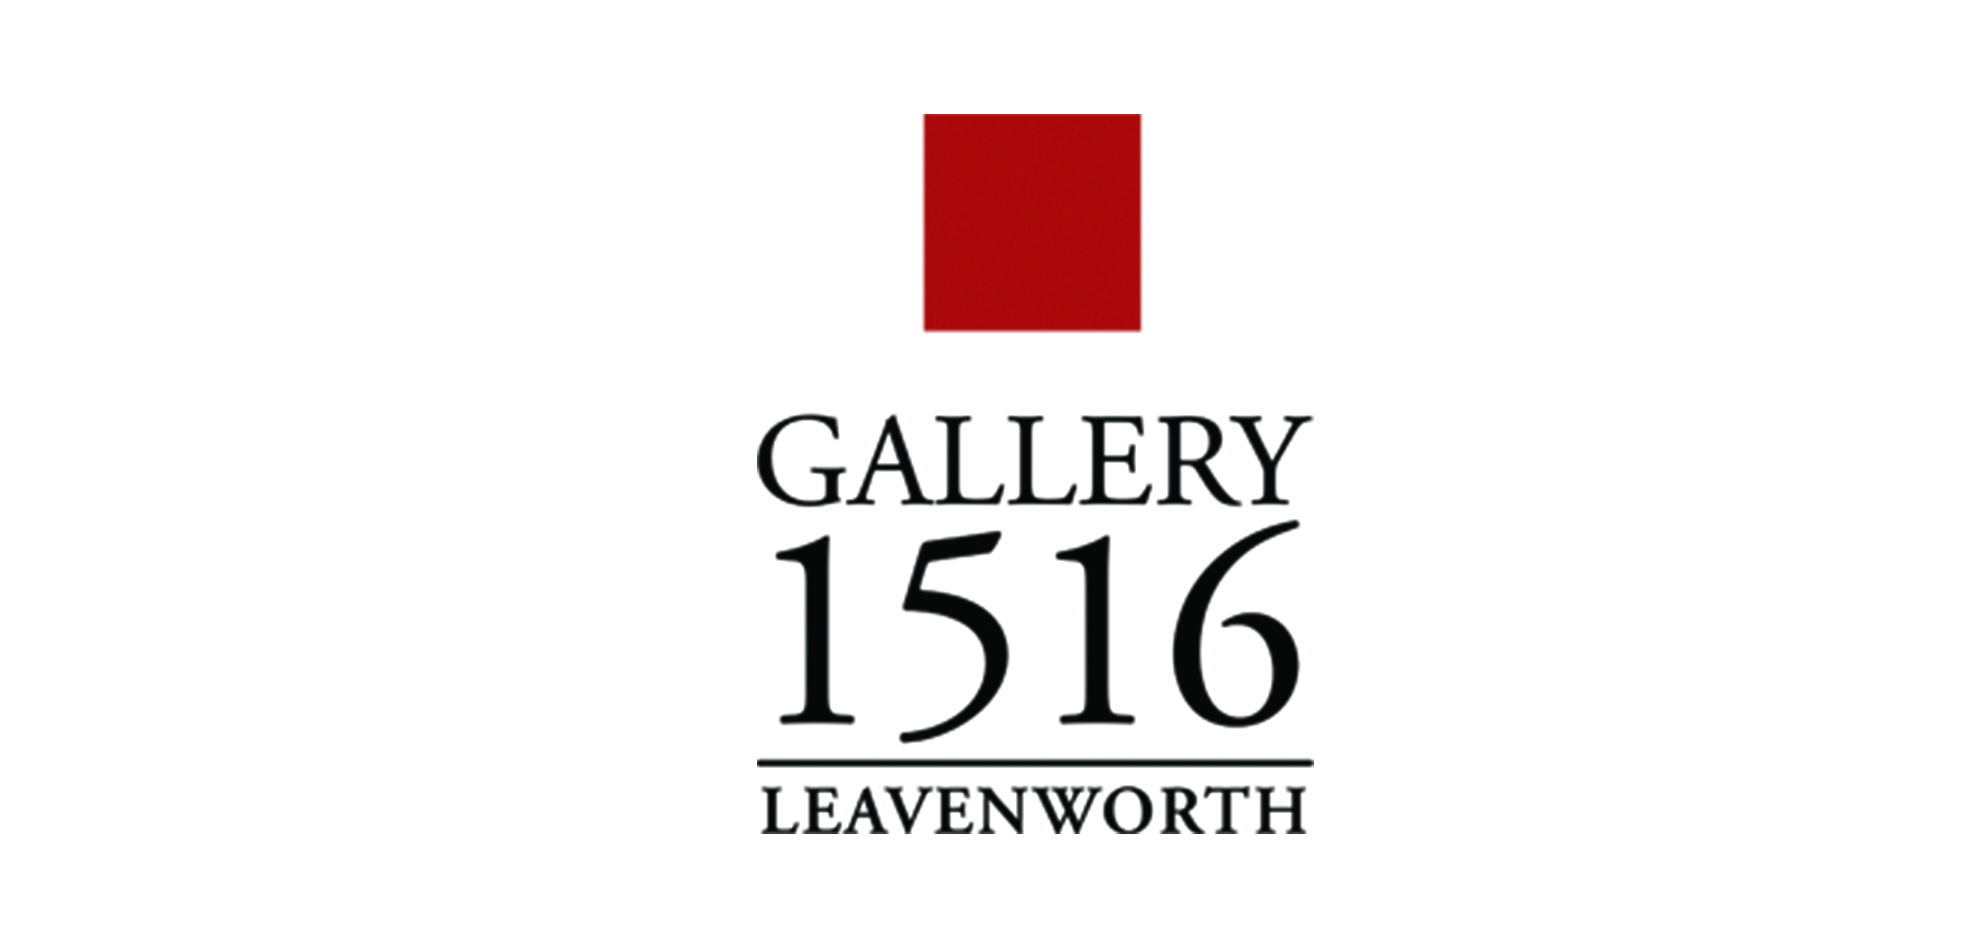 Gallery 1516